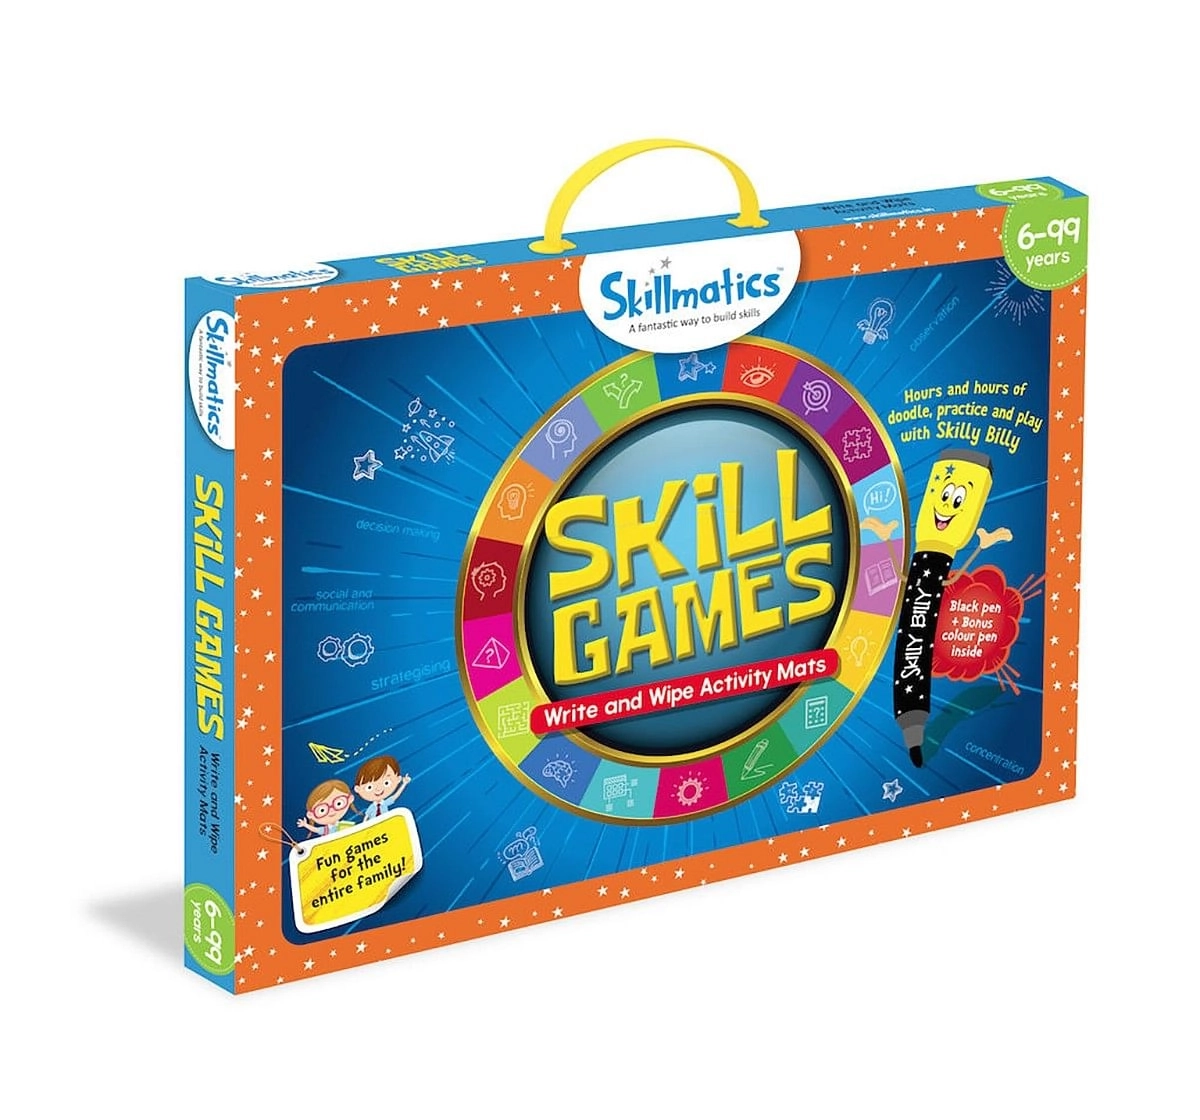  Skillmatics Skill Games   Games for Kids age 6Y+ 